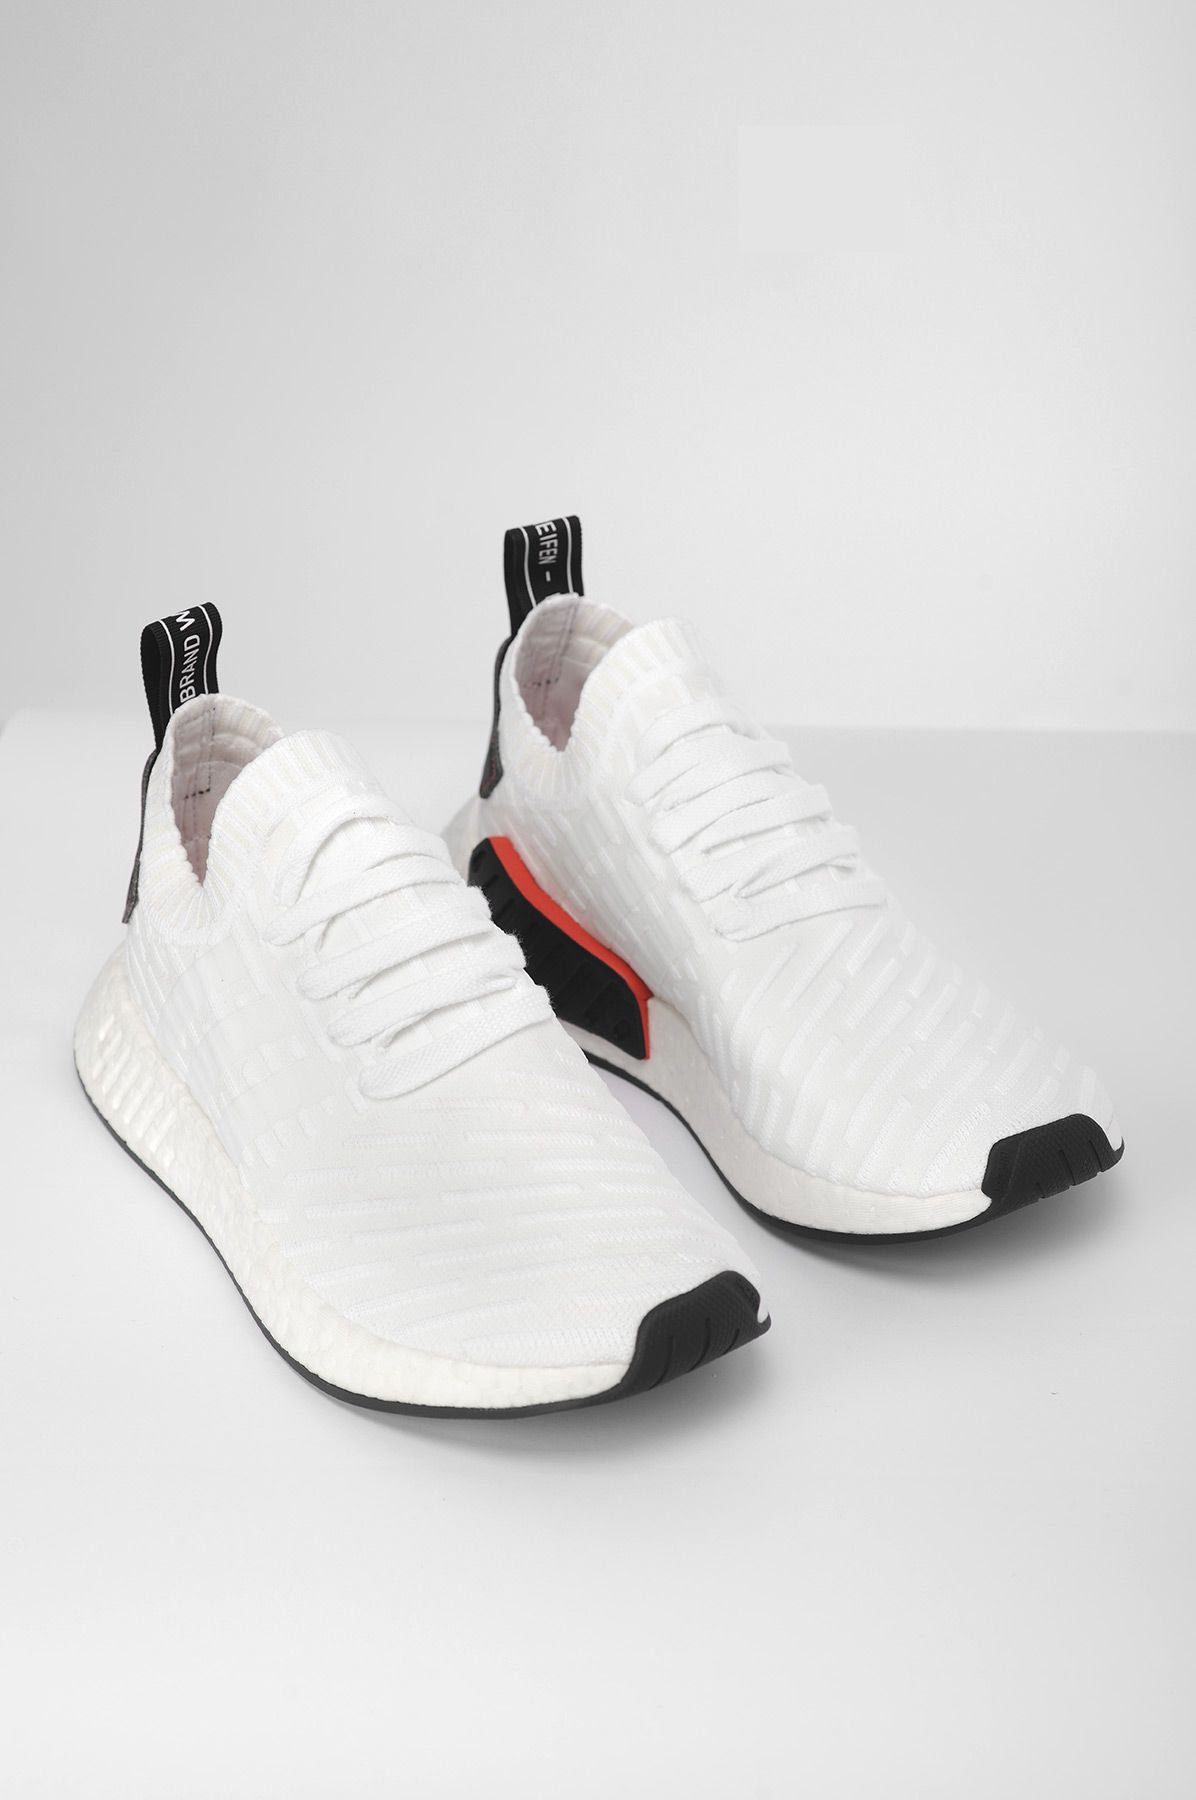 Ved en fejltagelse Gravere Munk adidas NMD R2 Primeknit White/Black // Available Now | Nice Kicks